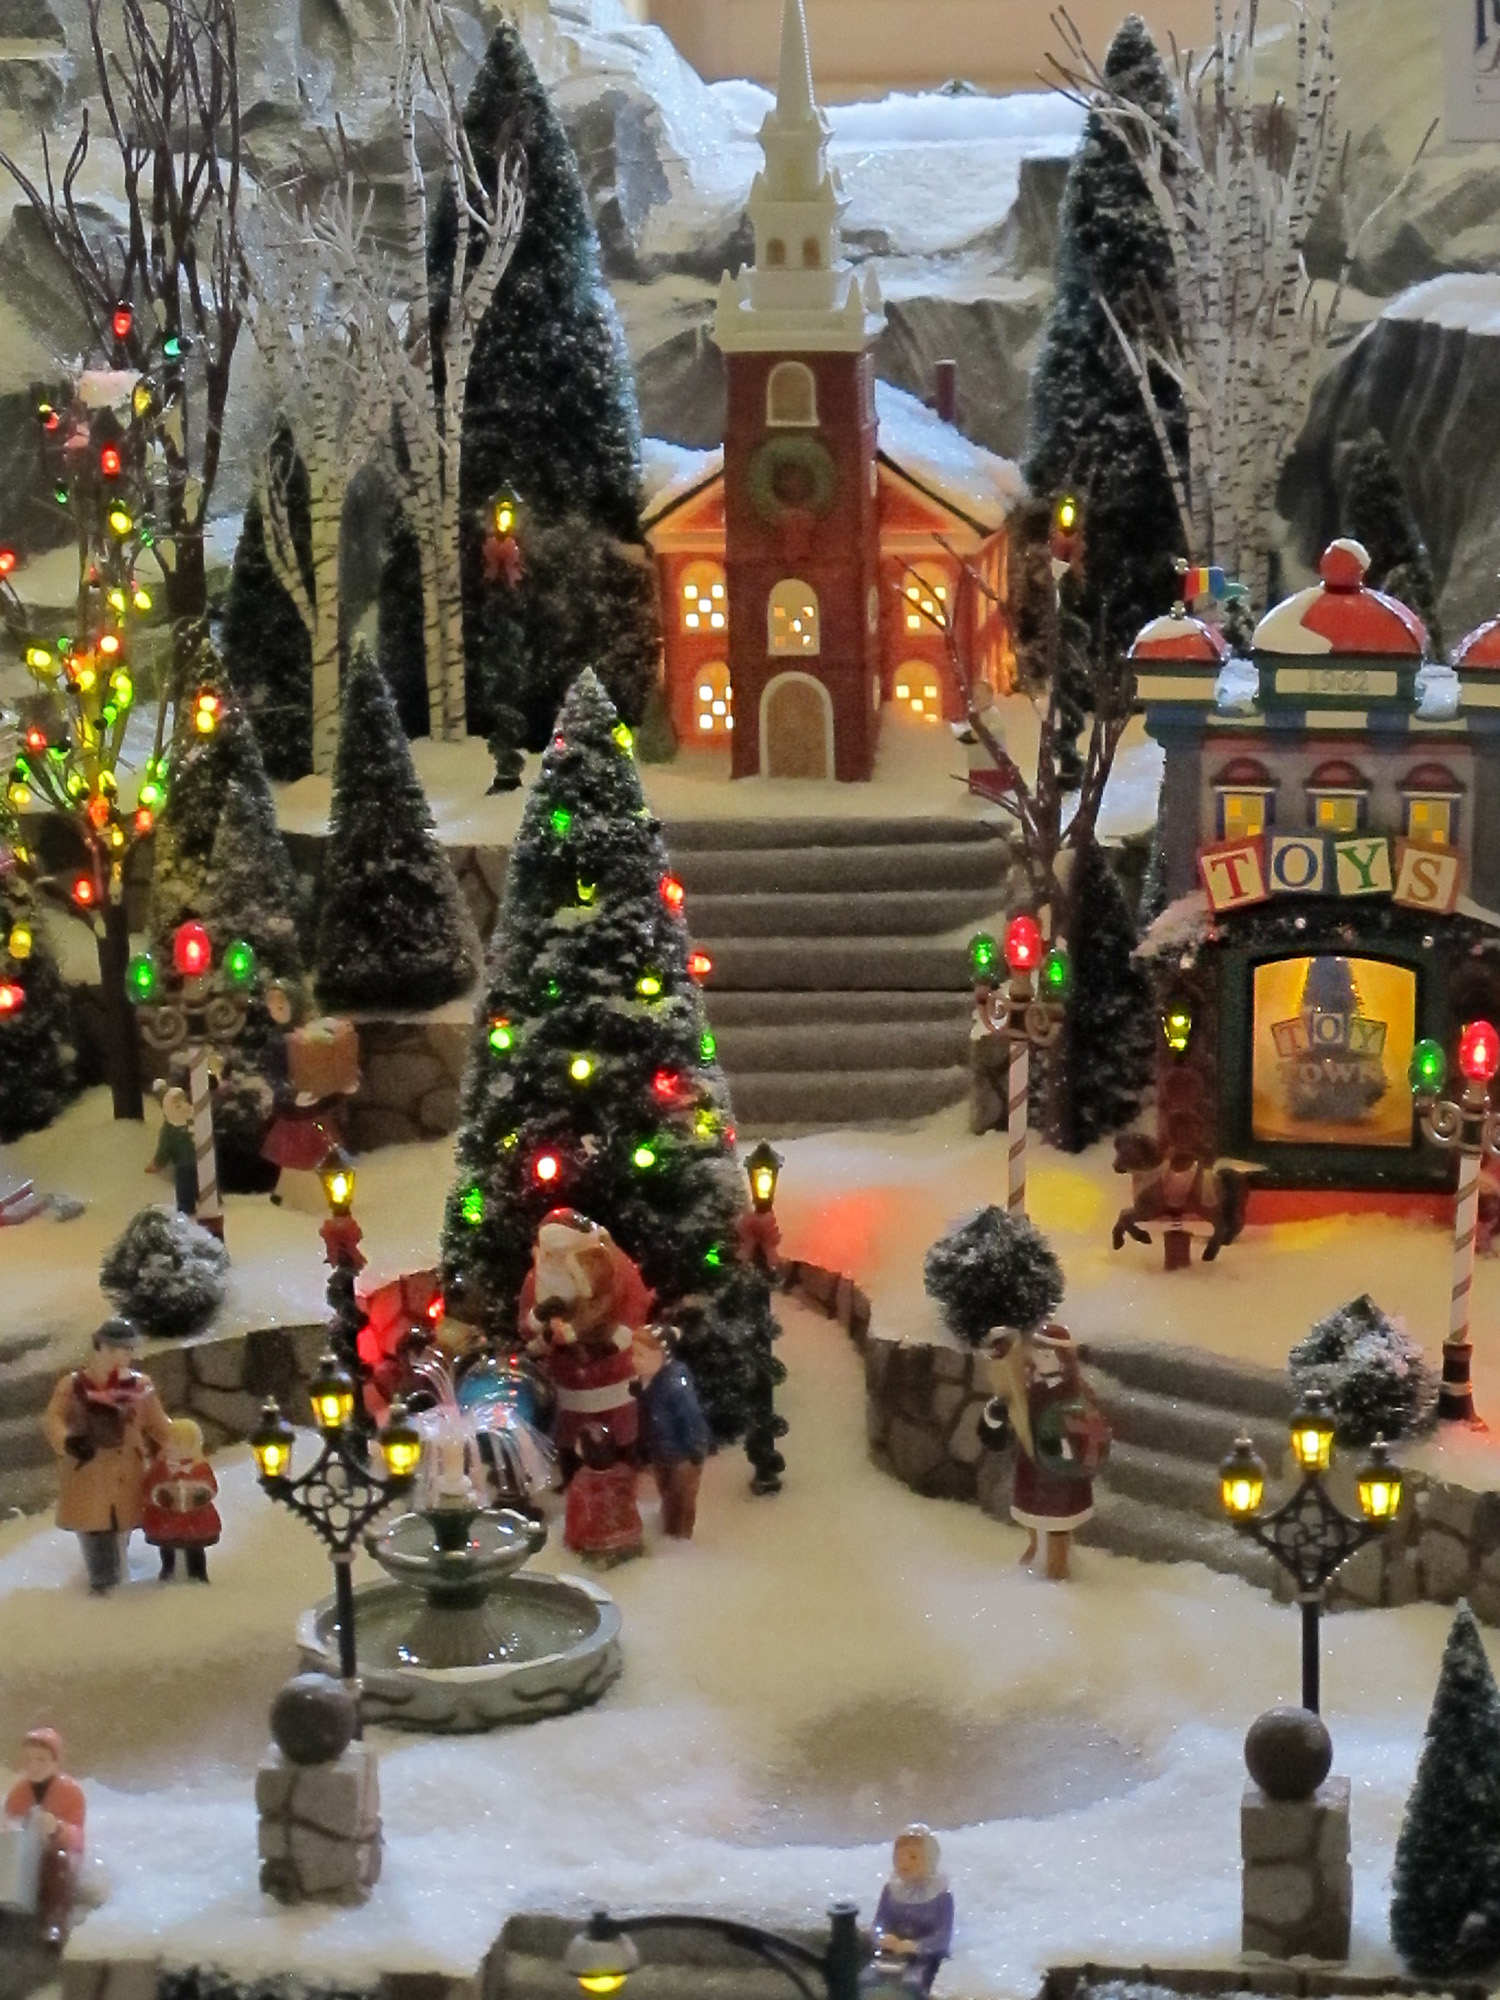 Christmas village display at Yacht Club